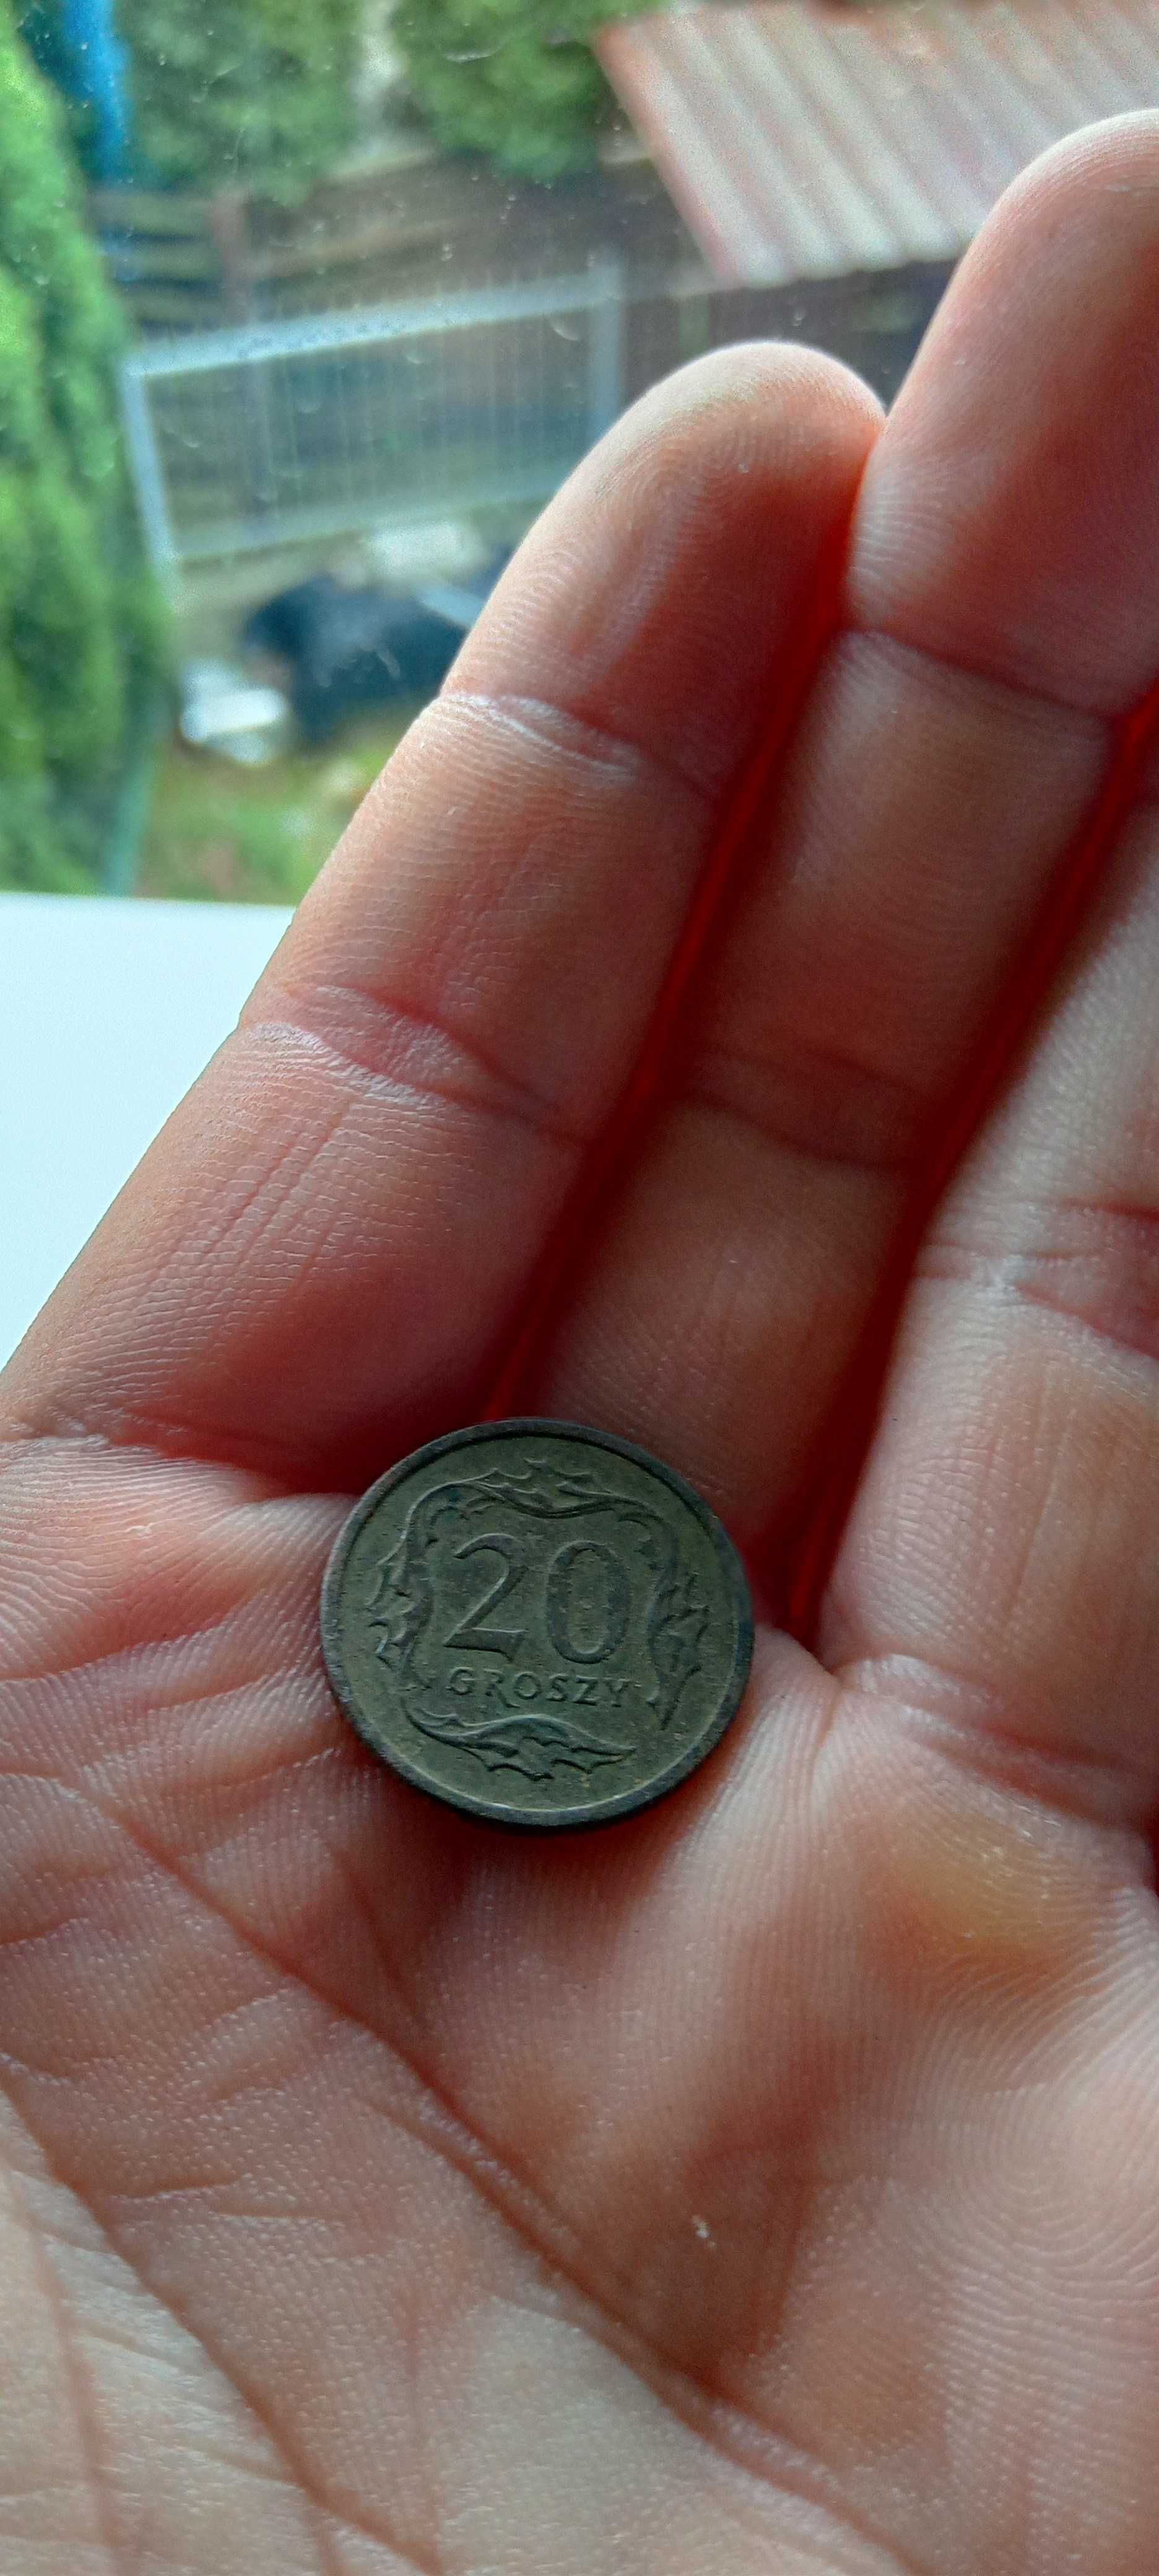 20 groszy 2001 r